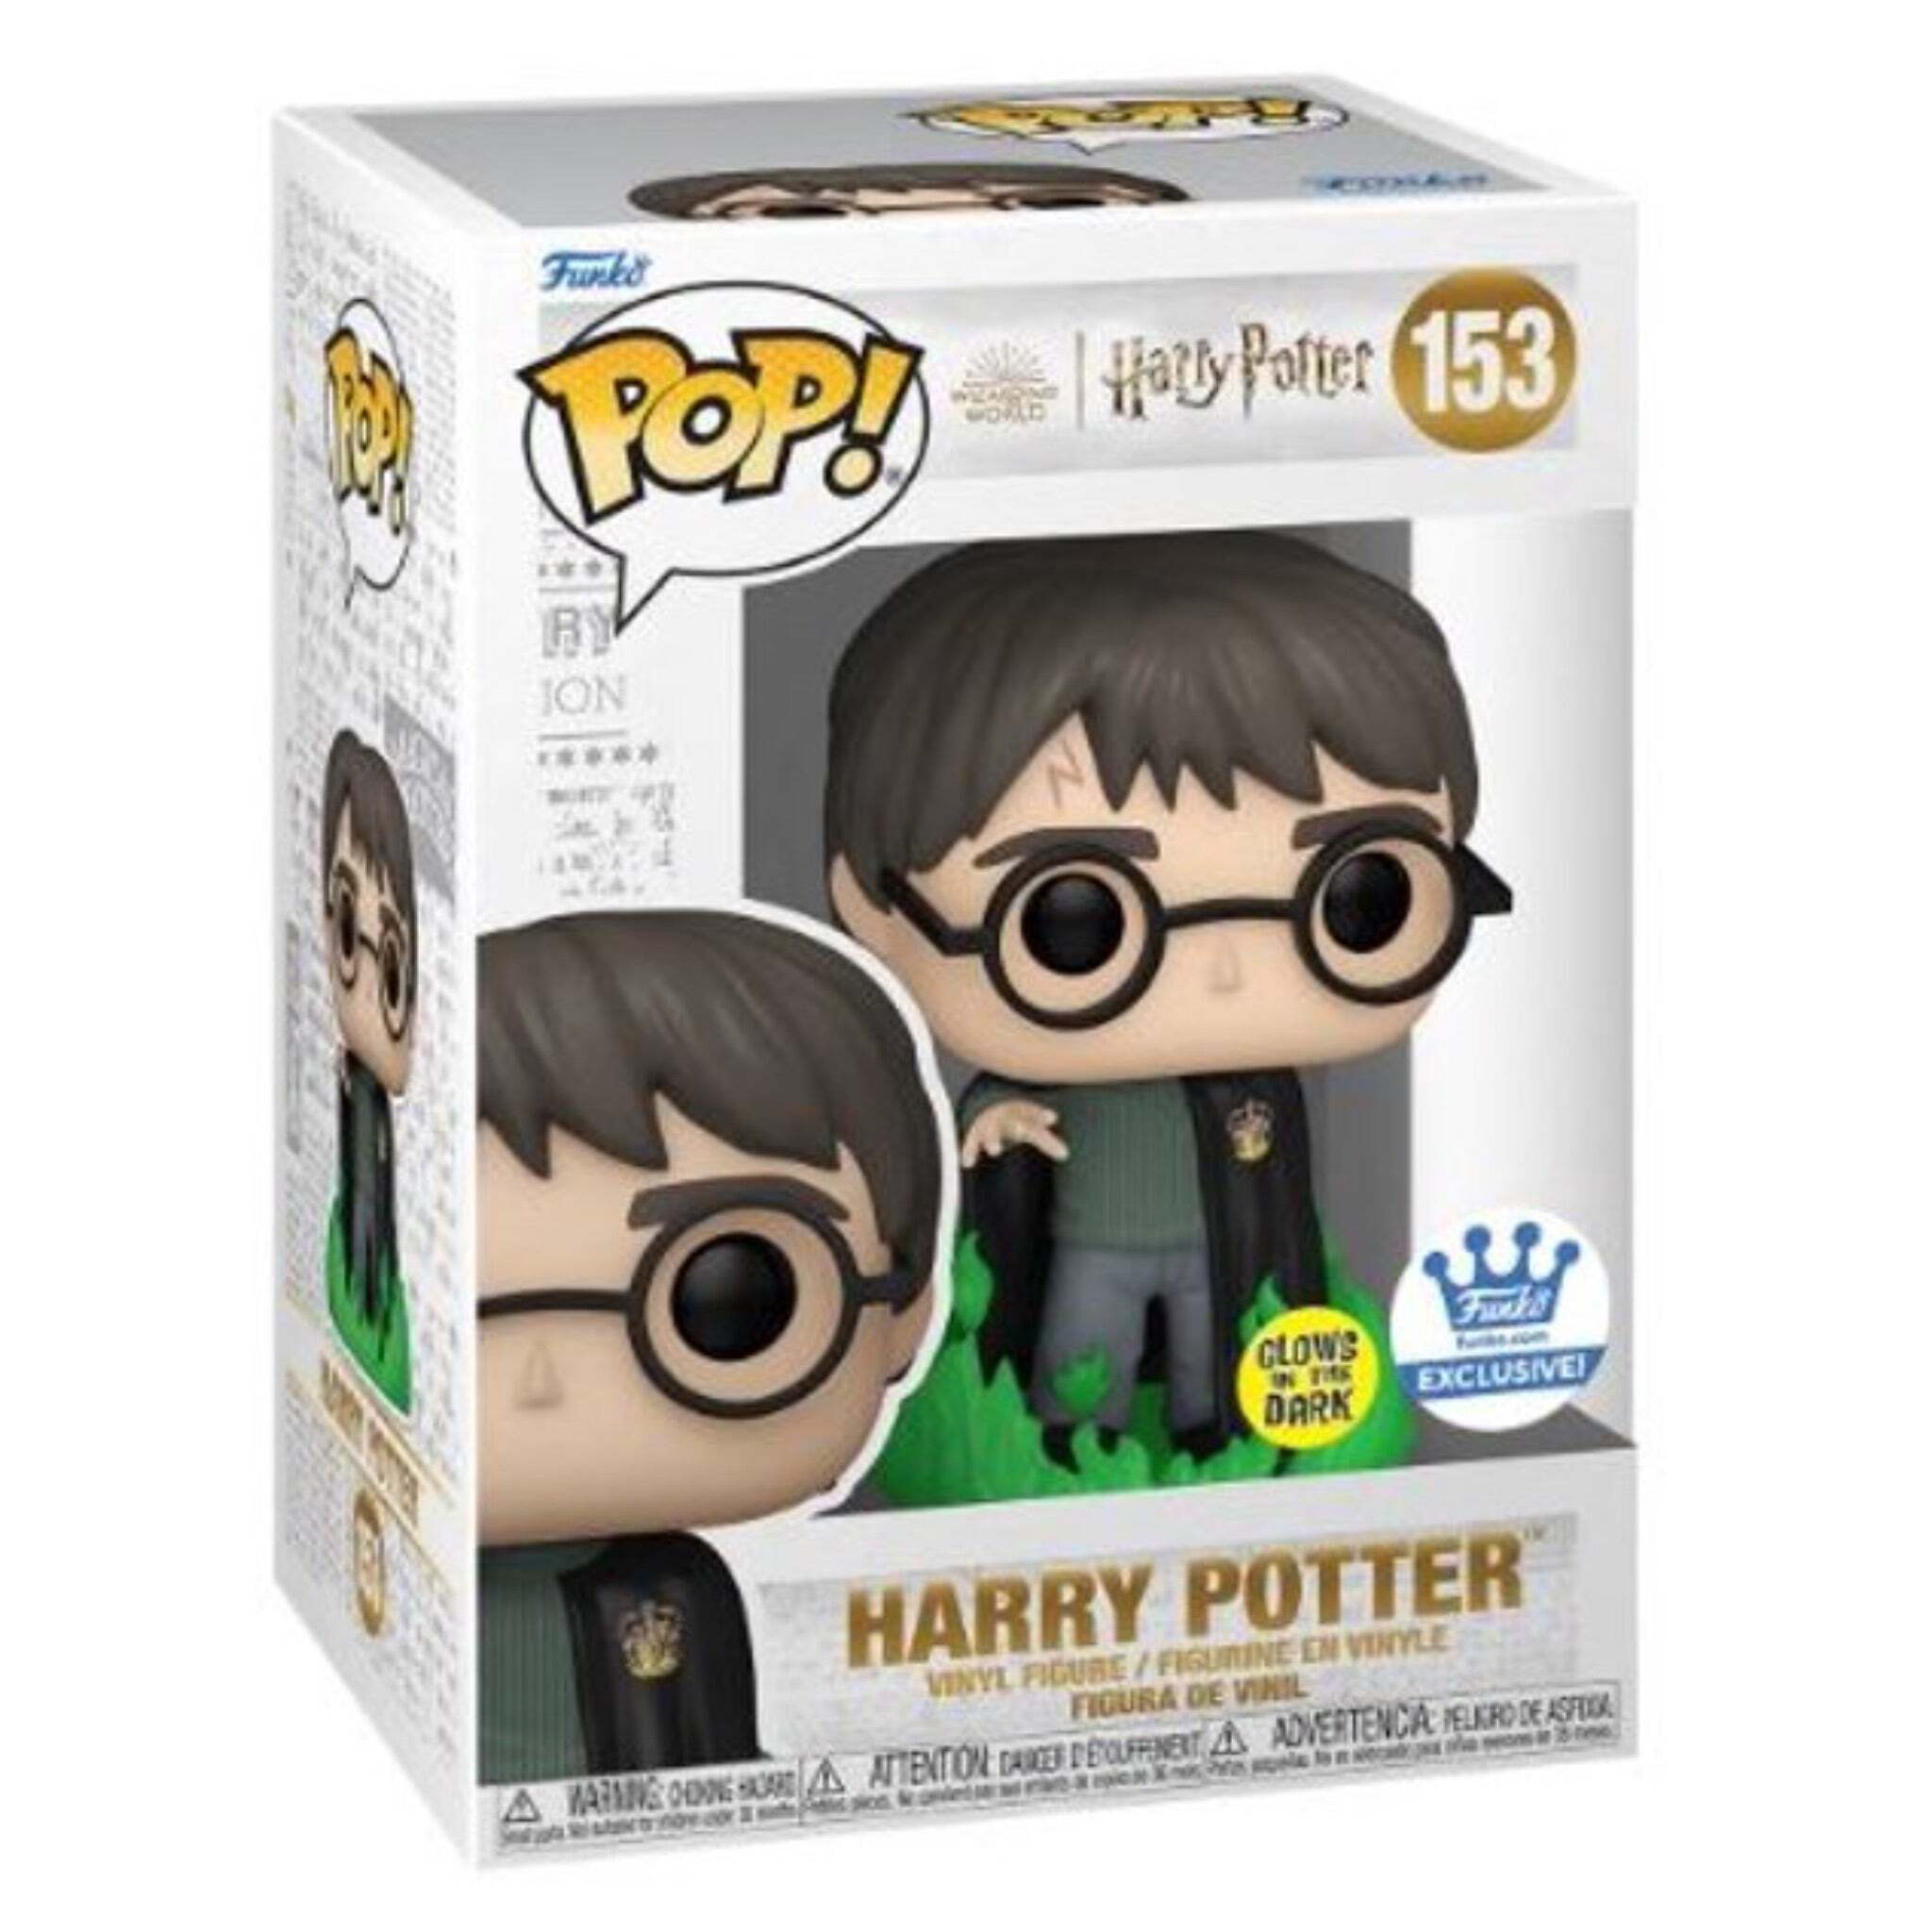 Harry Potter (GITD) Funko Pop! FUNKO EXCLUSIVE